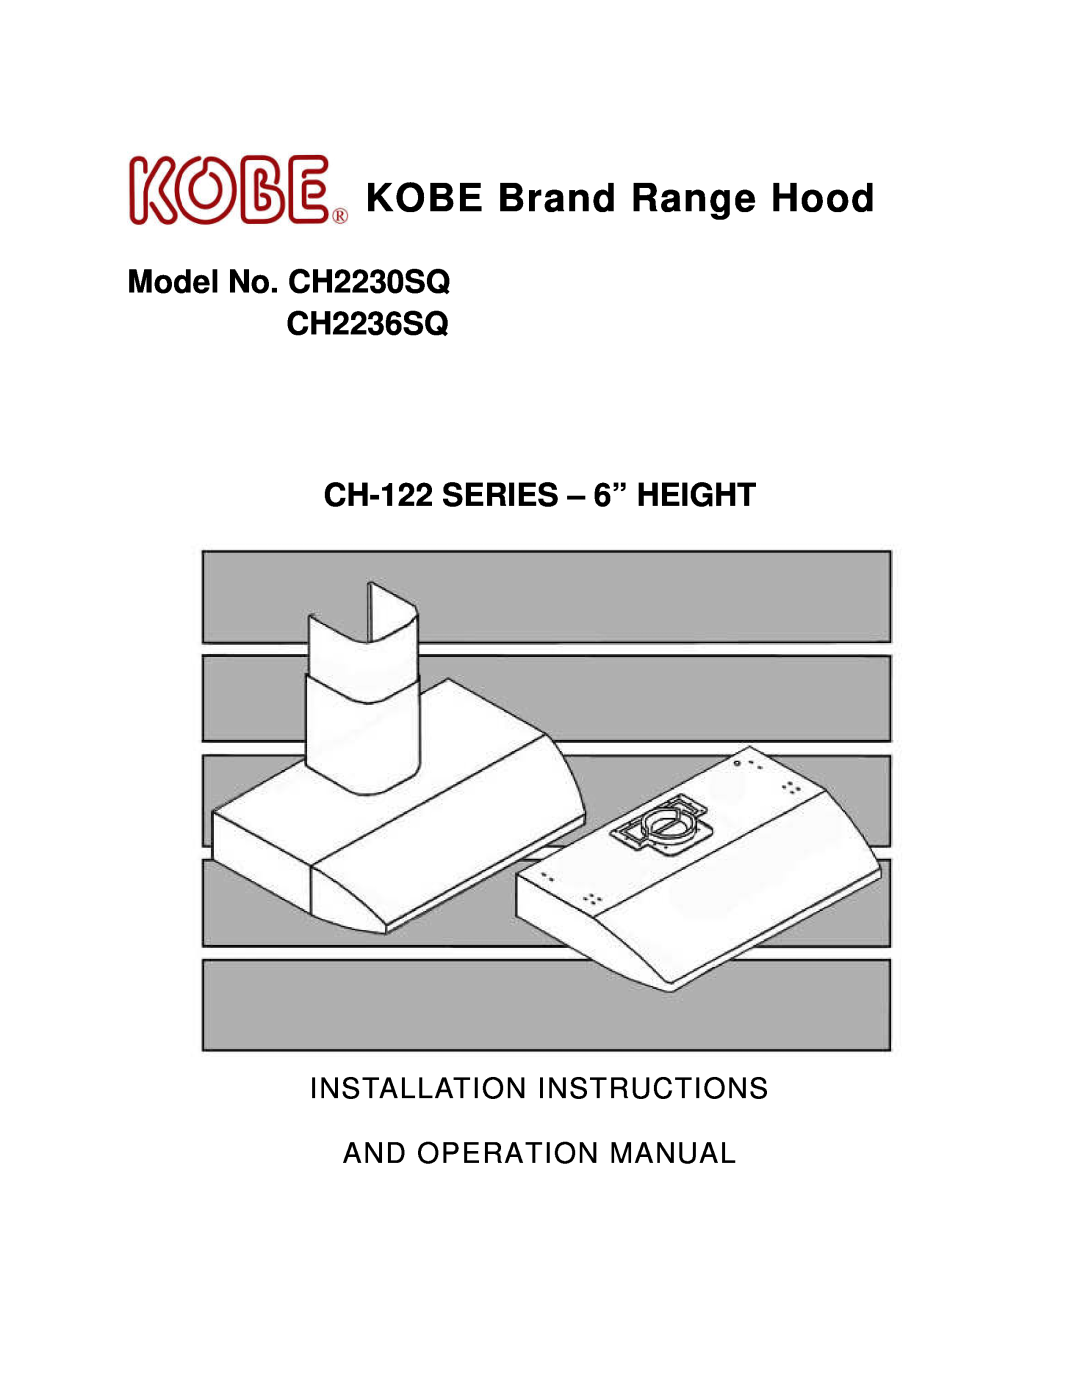 Kobe Range Hoods CH2230SQ, CH2236SQ installation instructions KOBE Brand Range Hood 